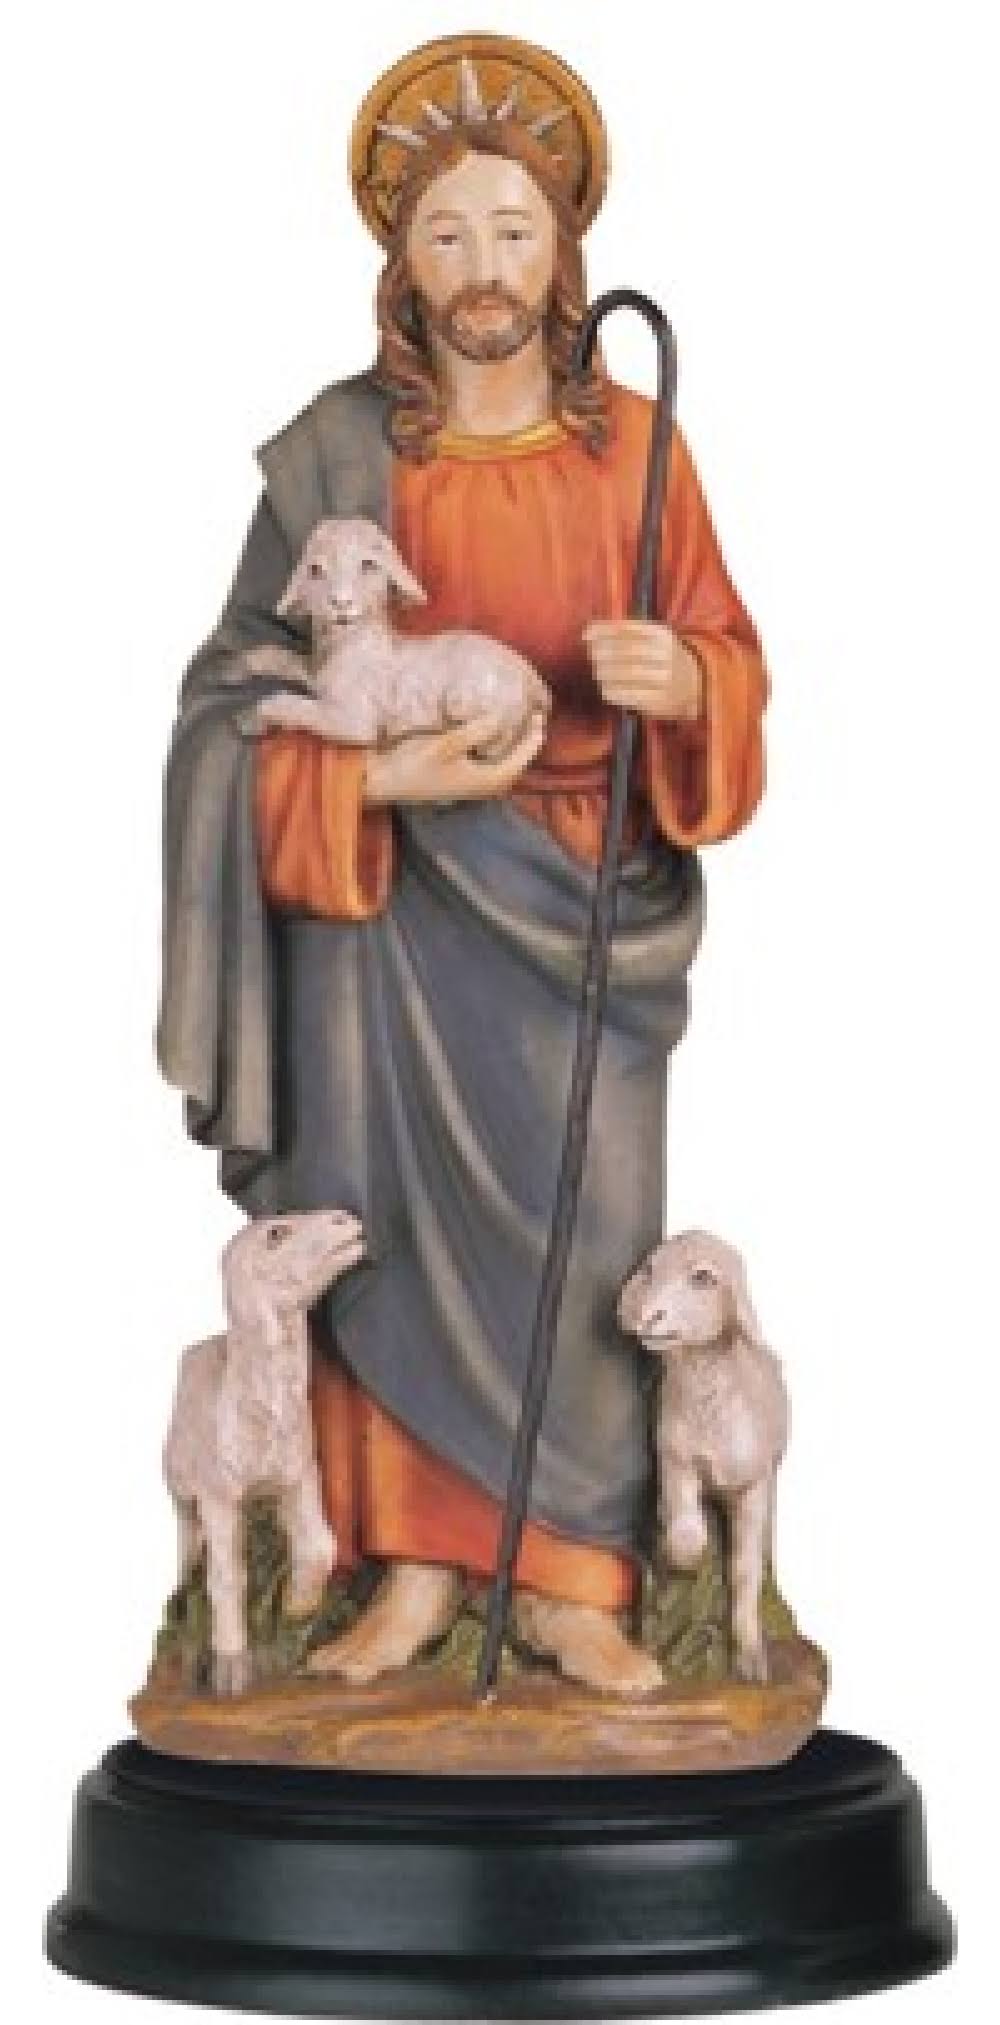 Stealstreet Jesus Good Shepherd Holy Religious Figurine Decoration Statue